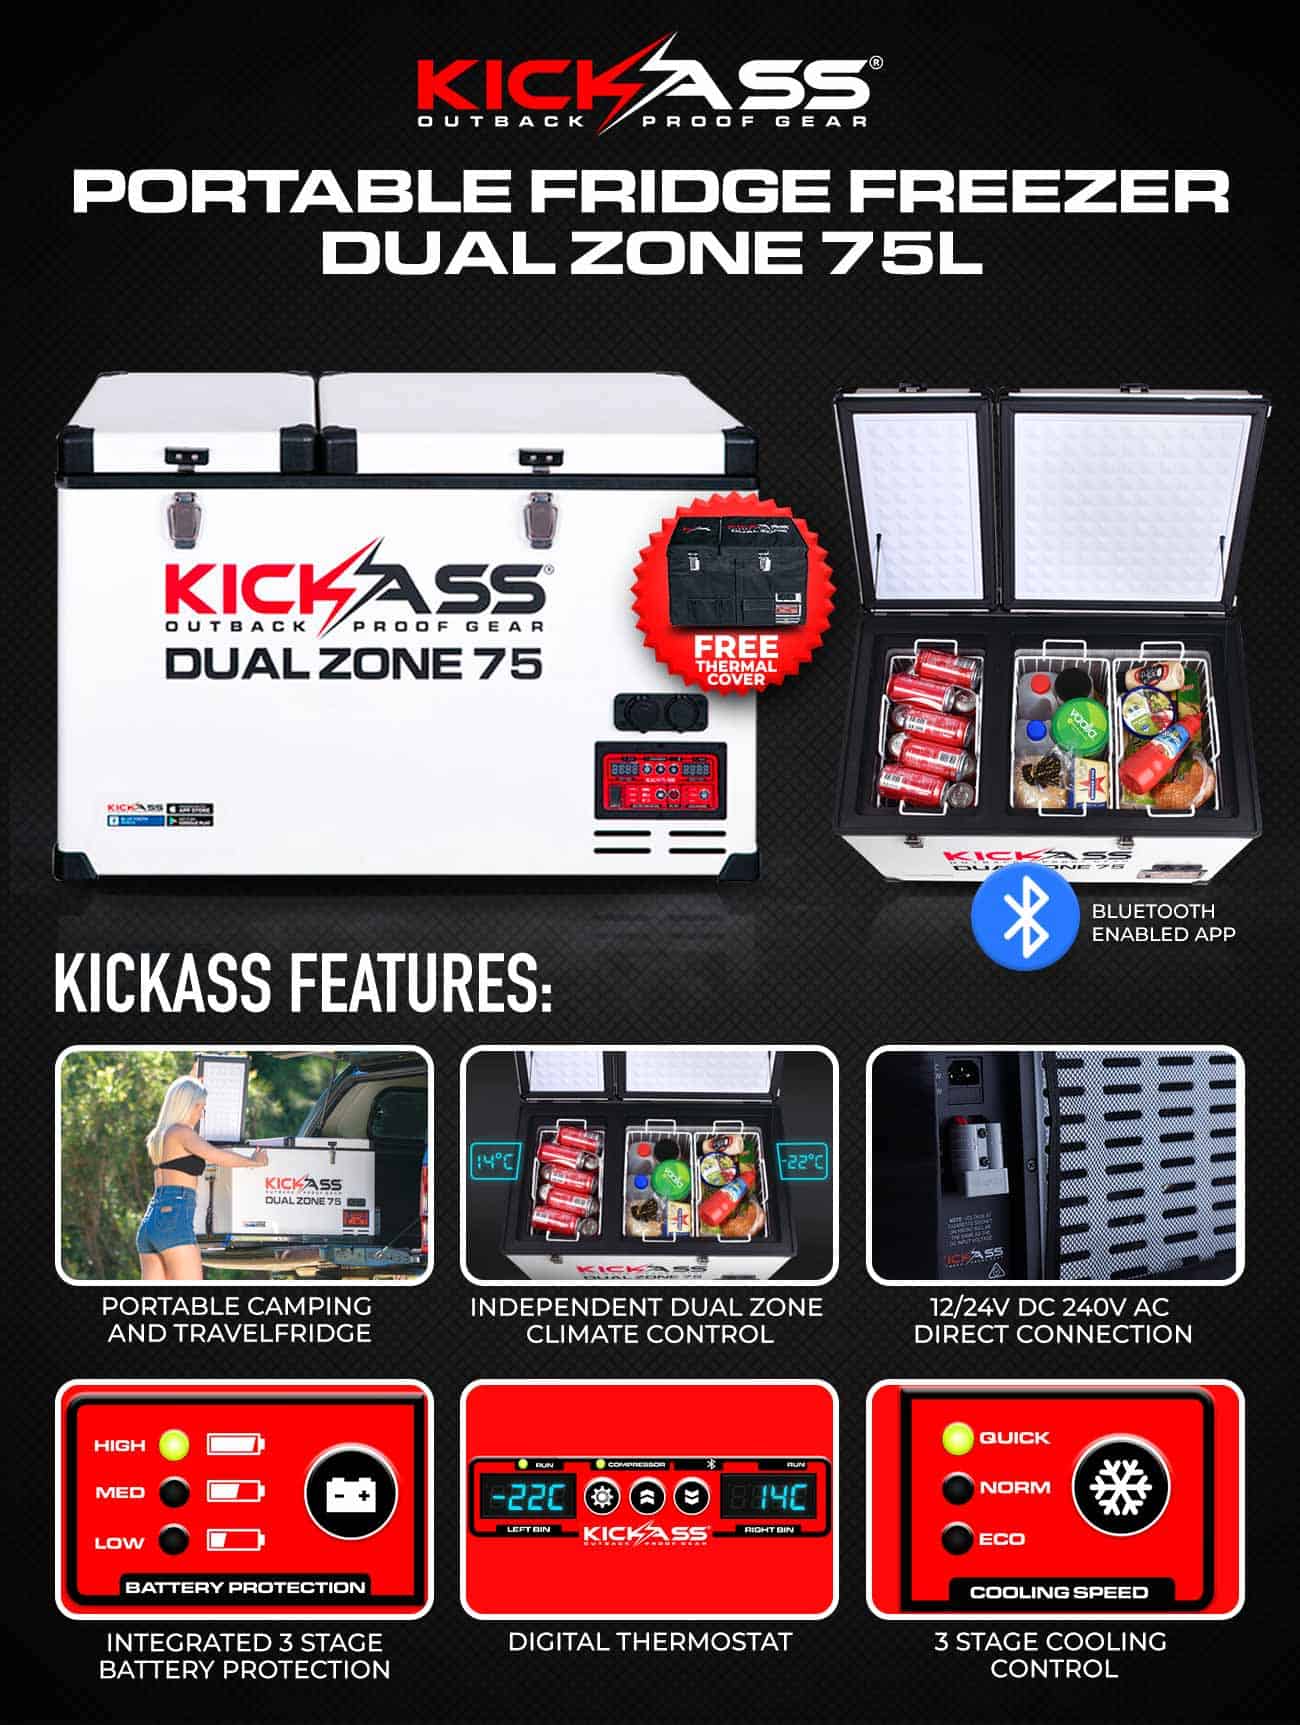 KICKASS Portable Fridge Freezer Dual Zone 75L